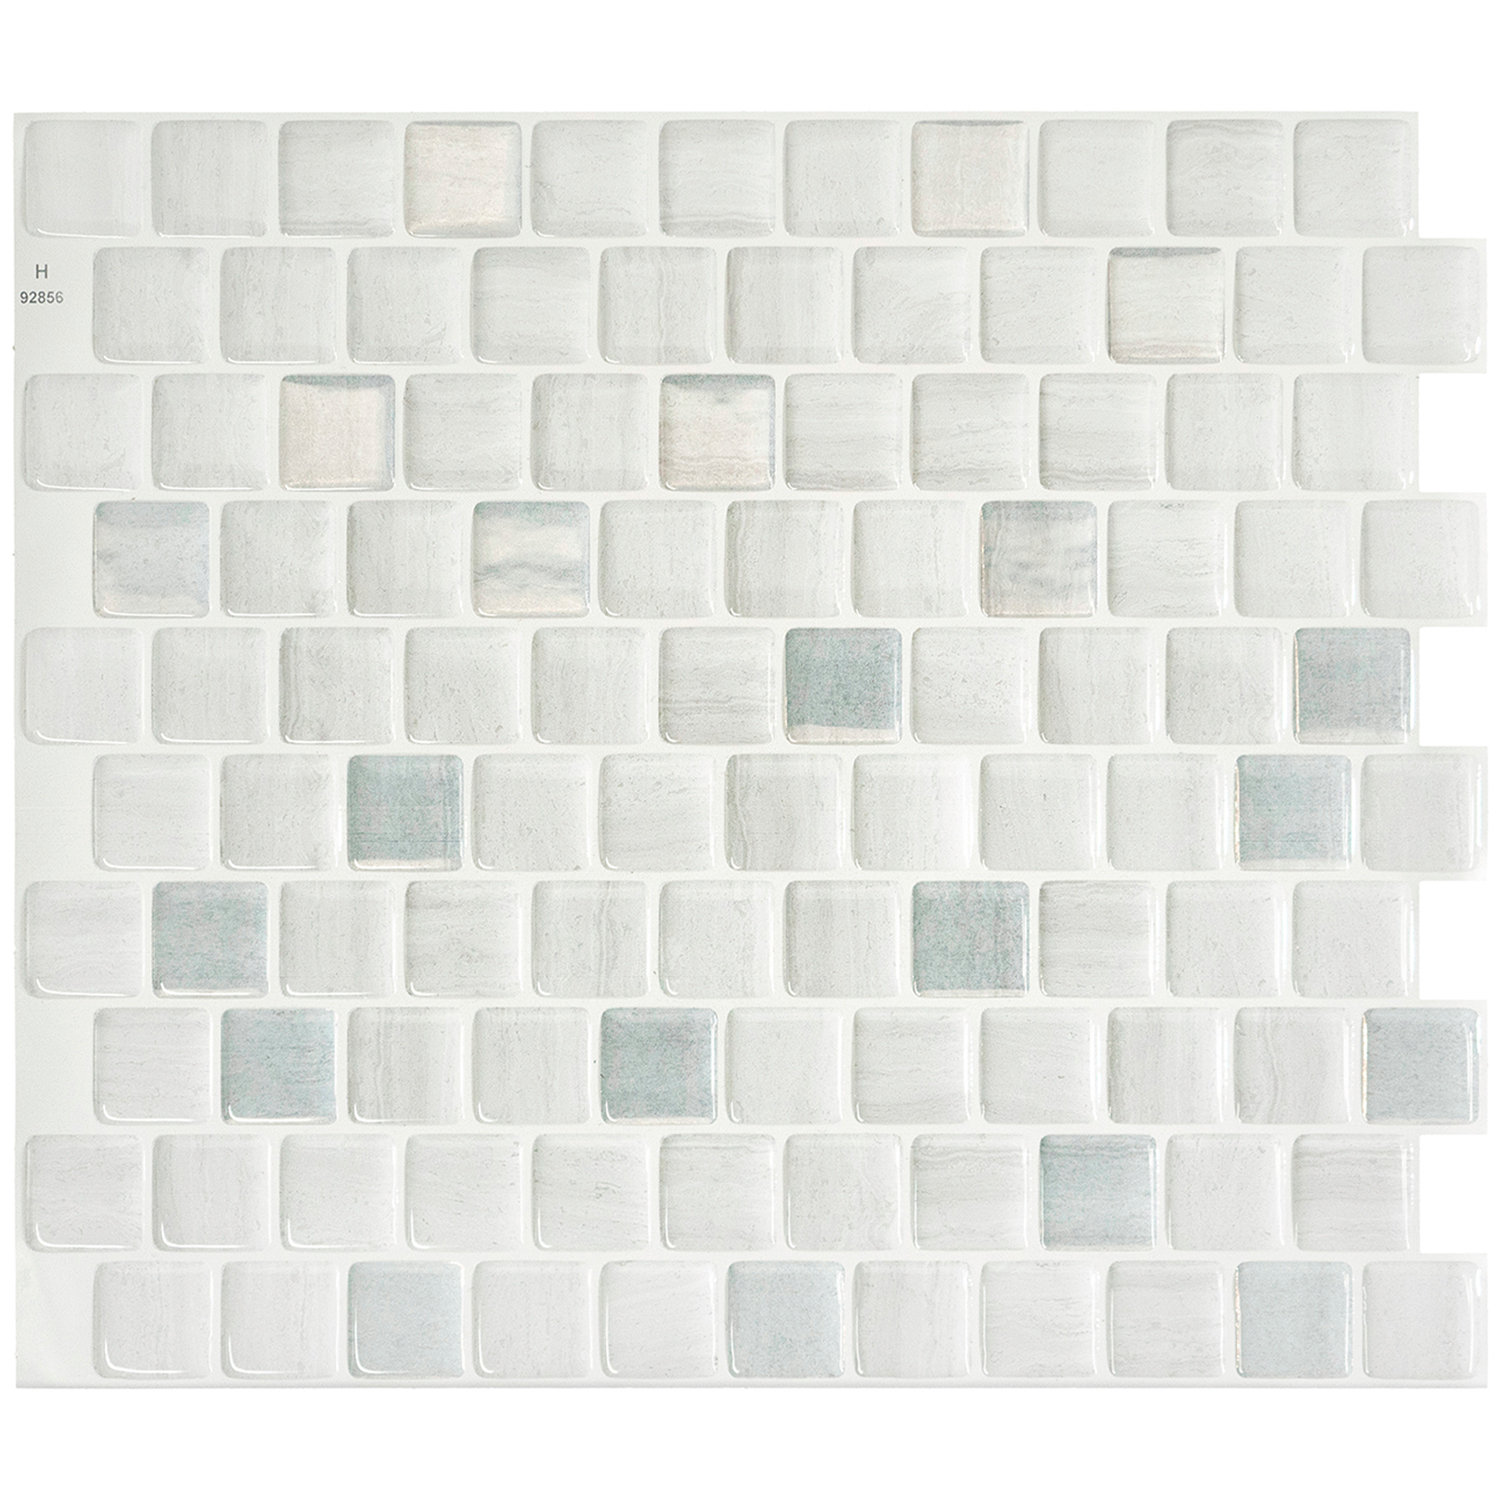 SMART TILES Peel and Stick Backsplash - 5 Sheets of 9 x 9 - 3D